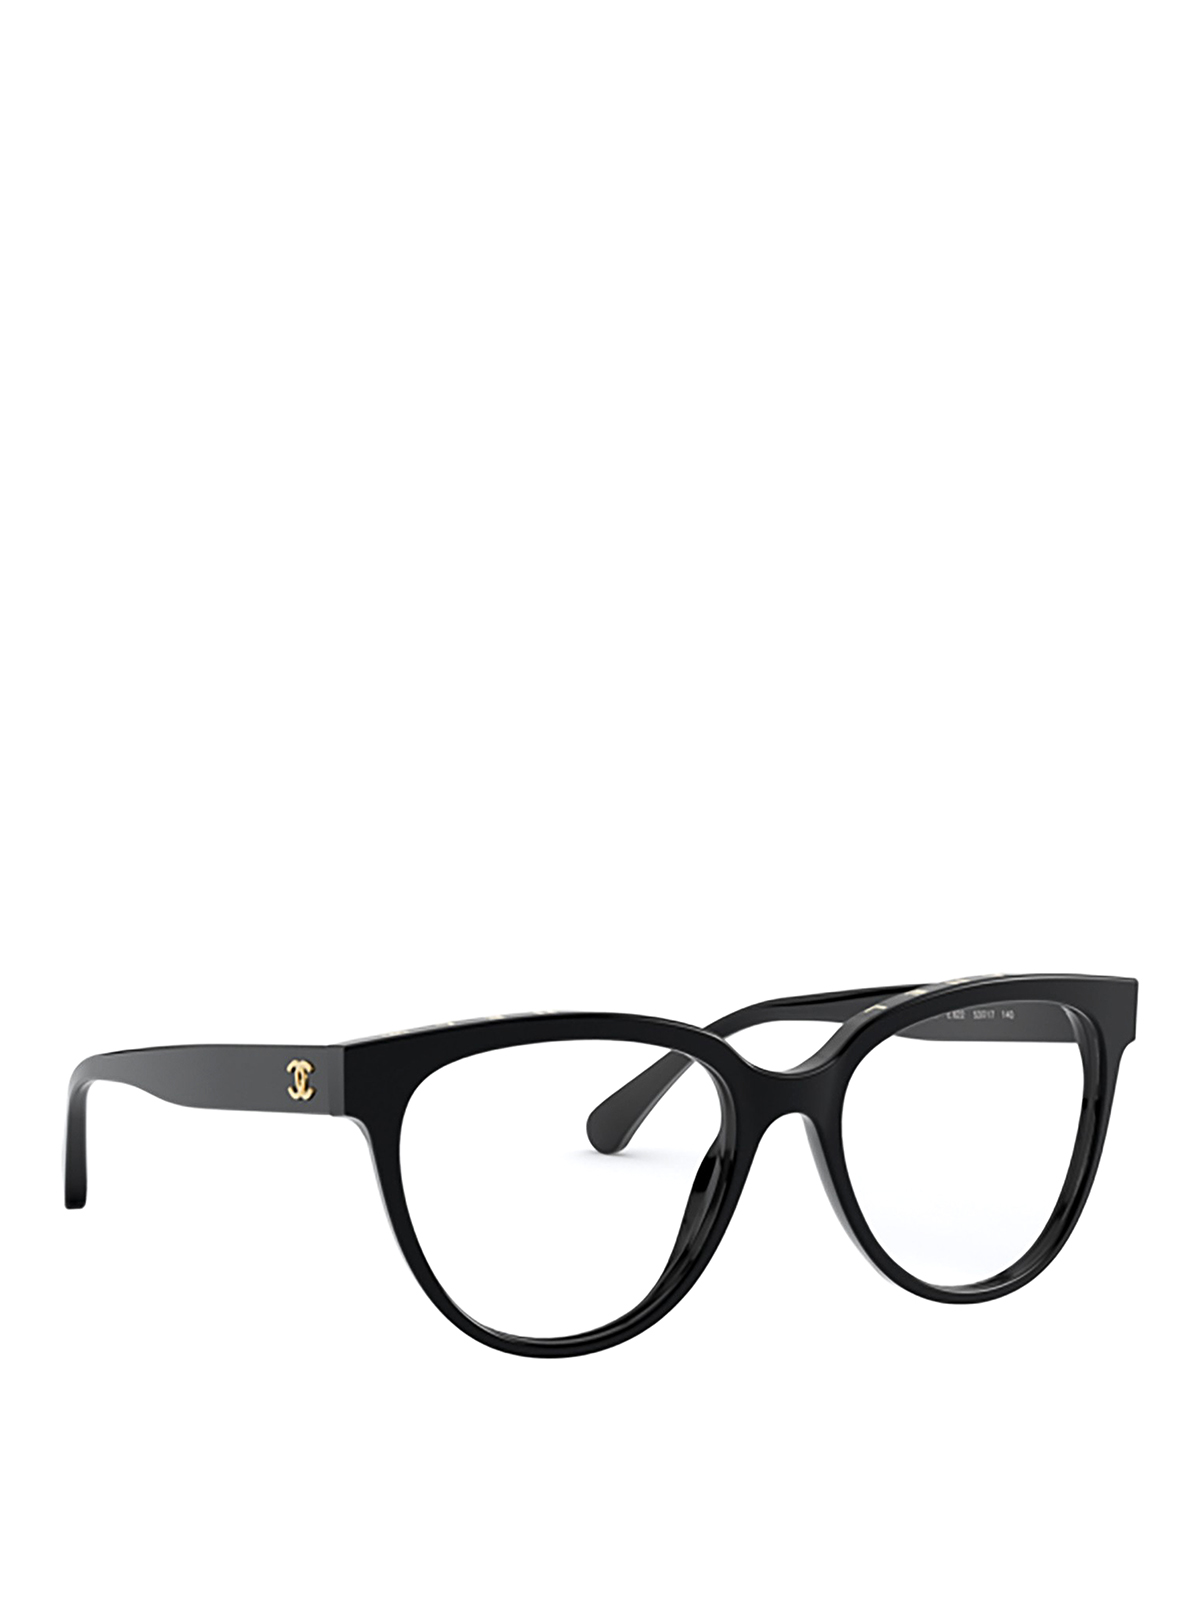 Gold logo frame black round eyeglasses